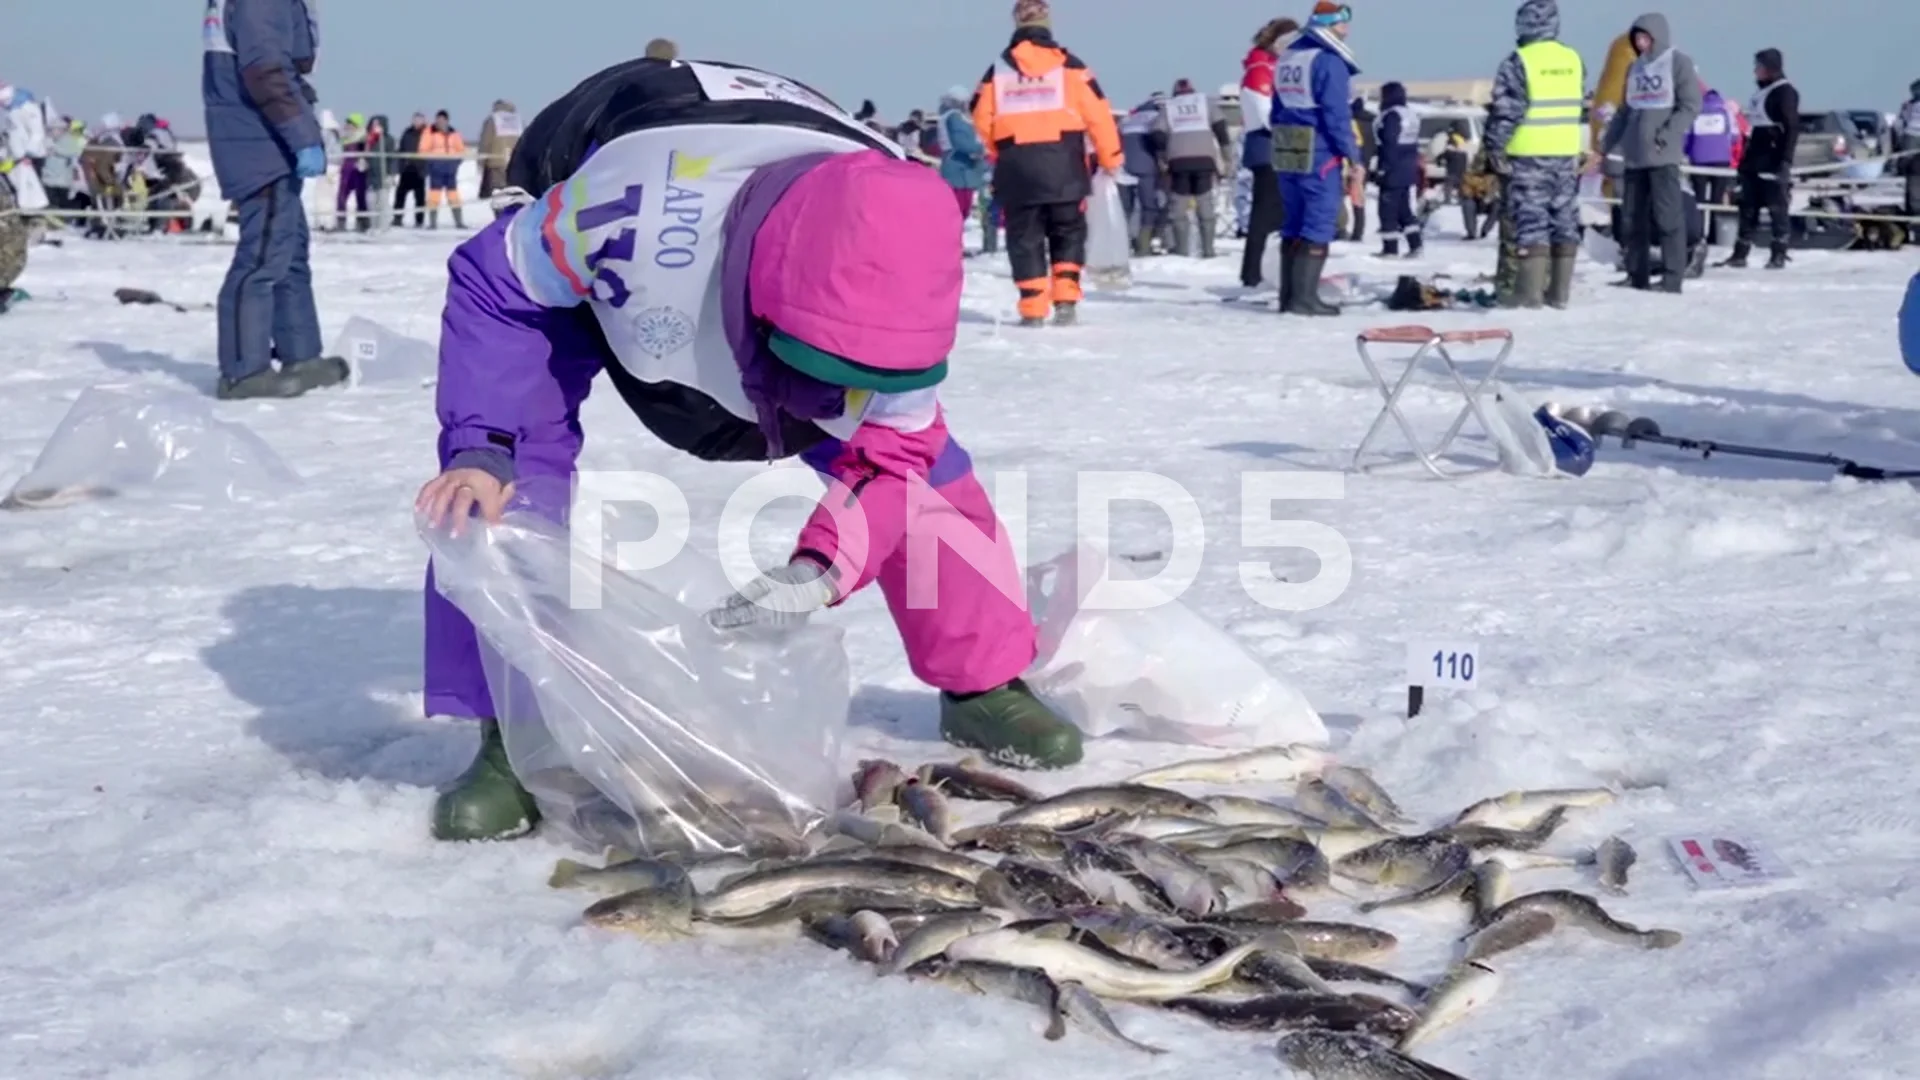 https://images.pond5.com/girl-puts-caught-fish-bag-footage-188600814_prevstill.jpeg